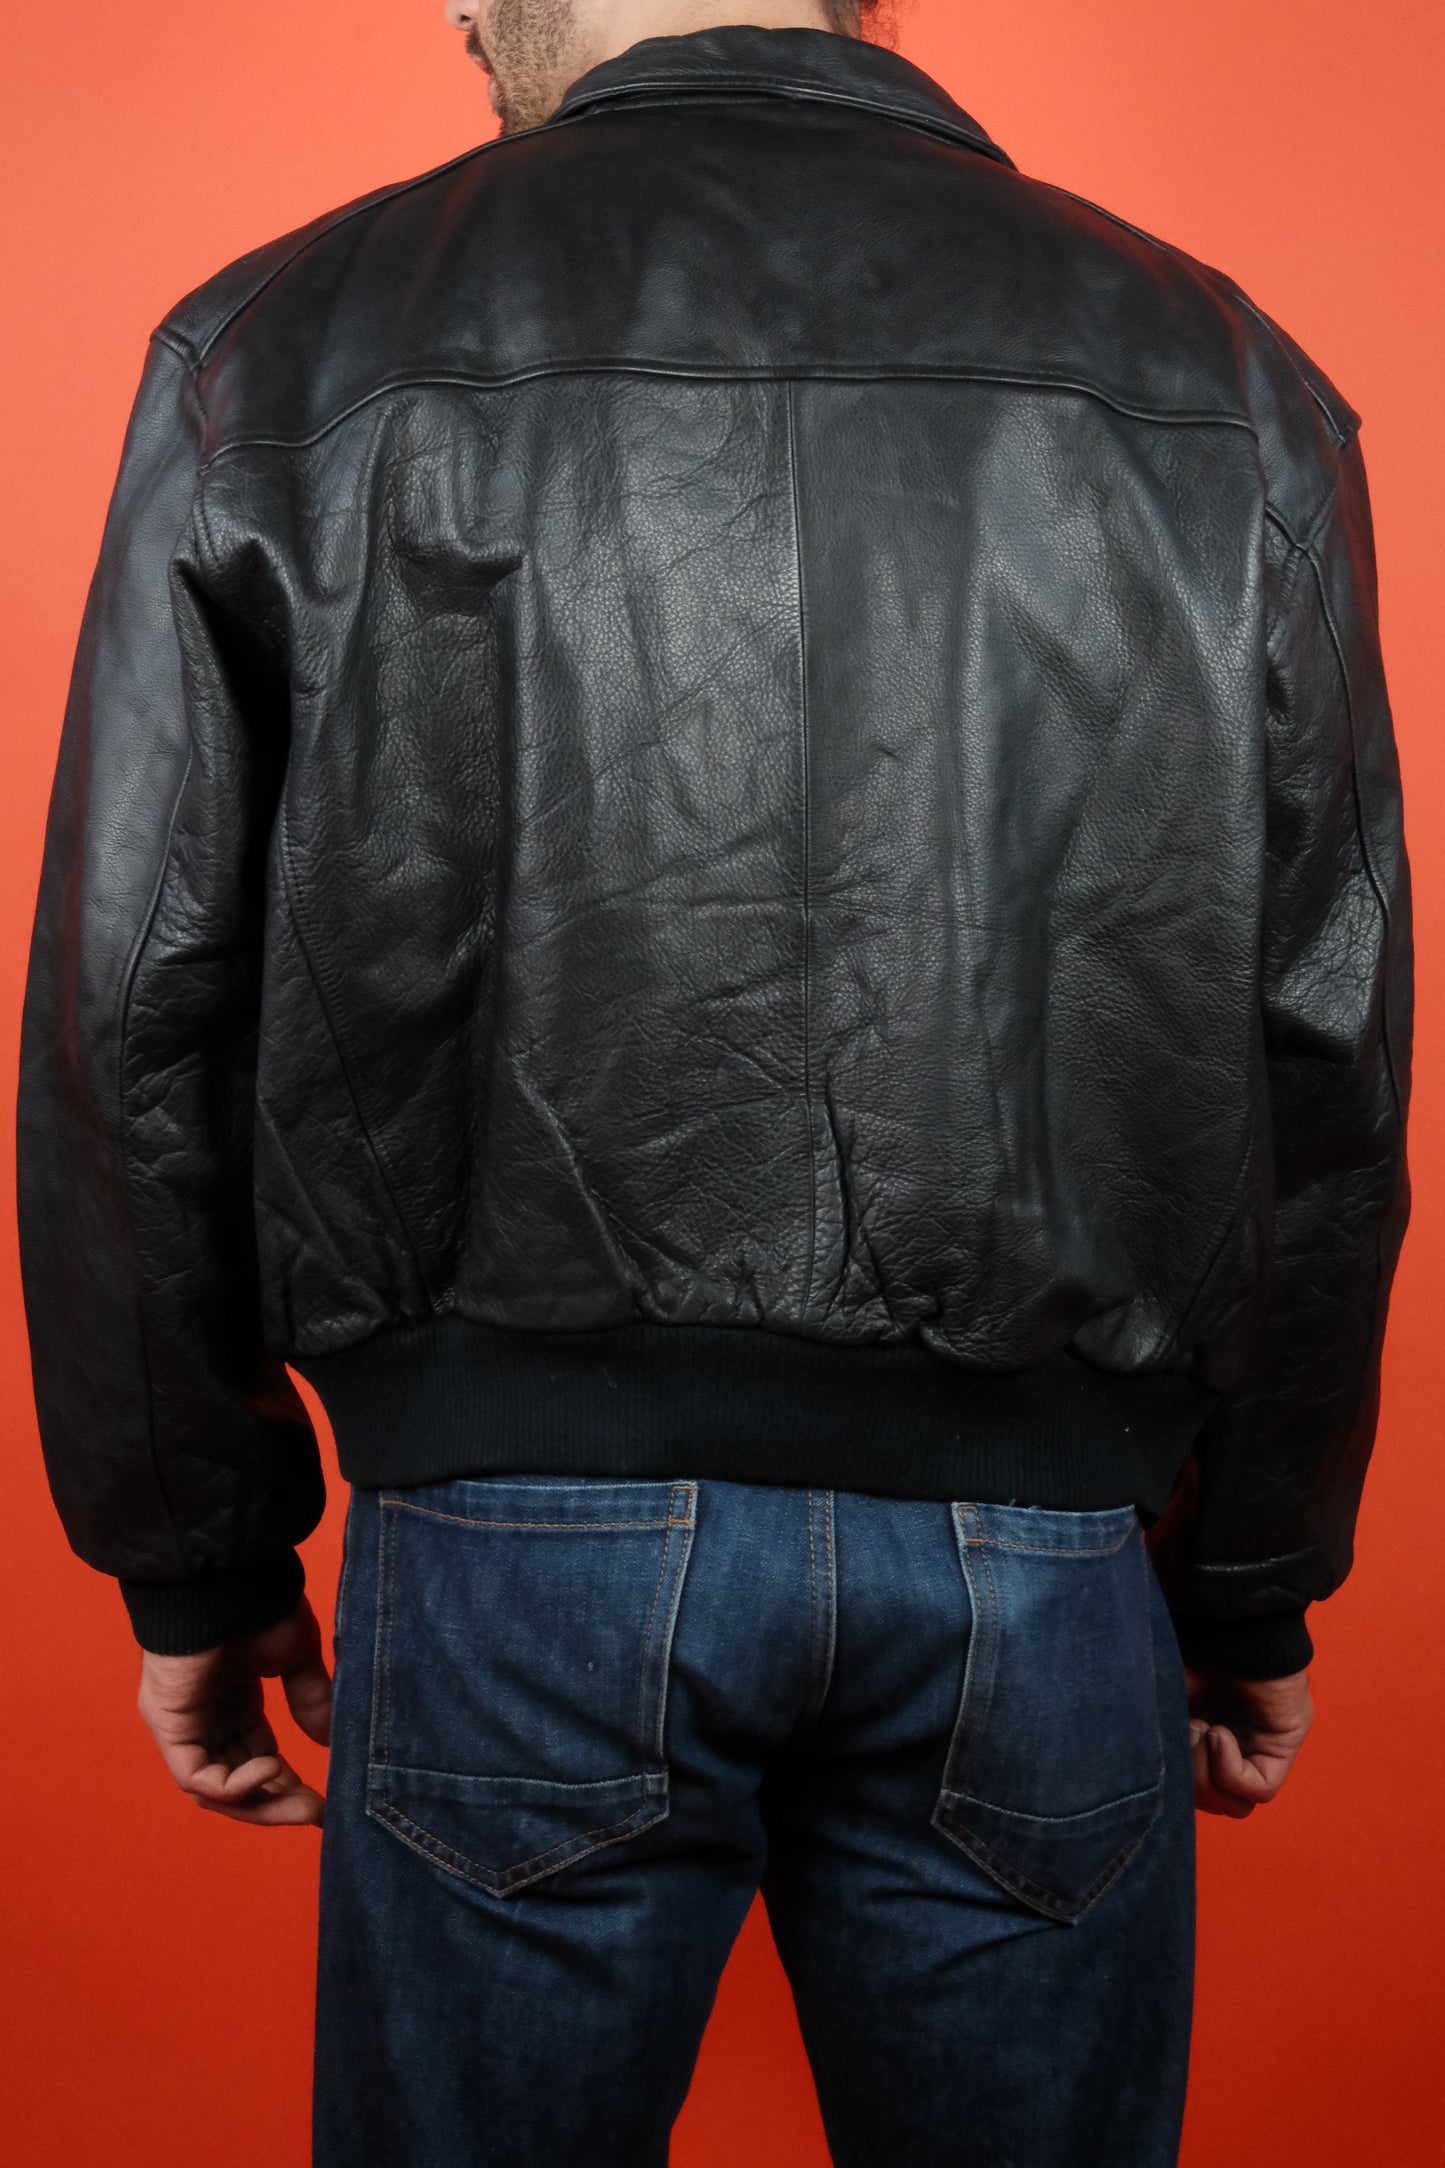 Levi's Black Leather Jacket 'M' - vintage clothing clochard92.com